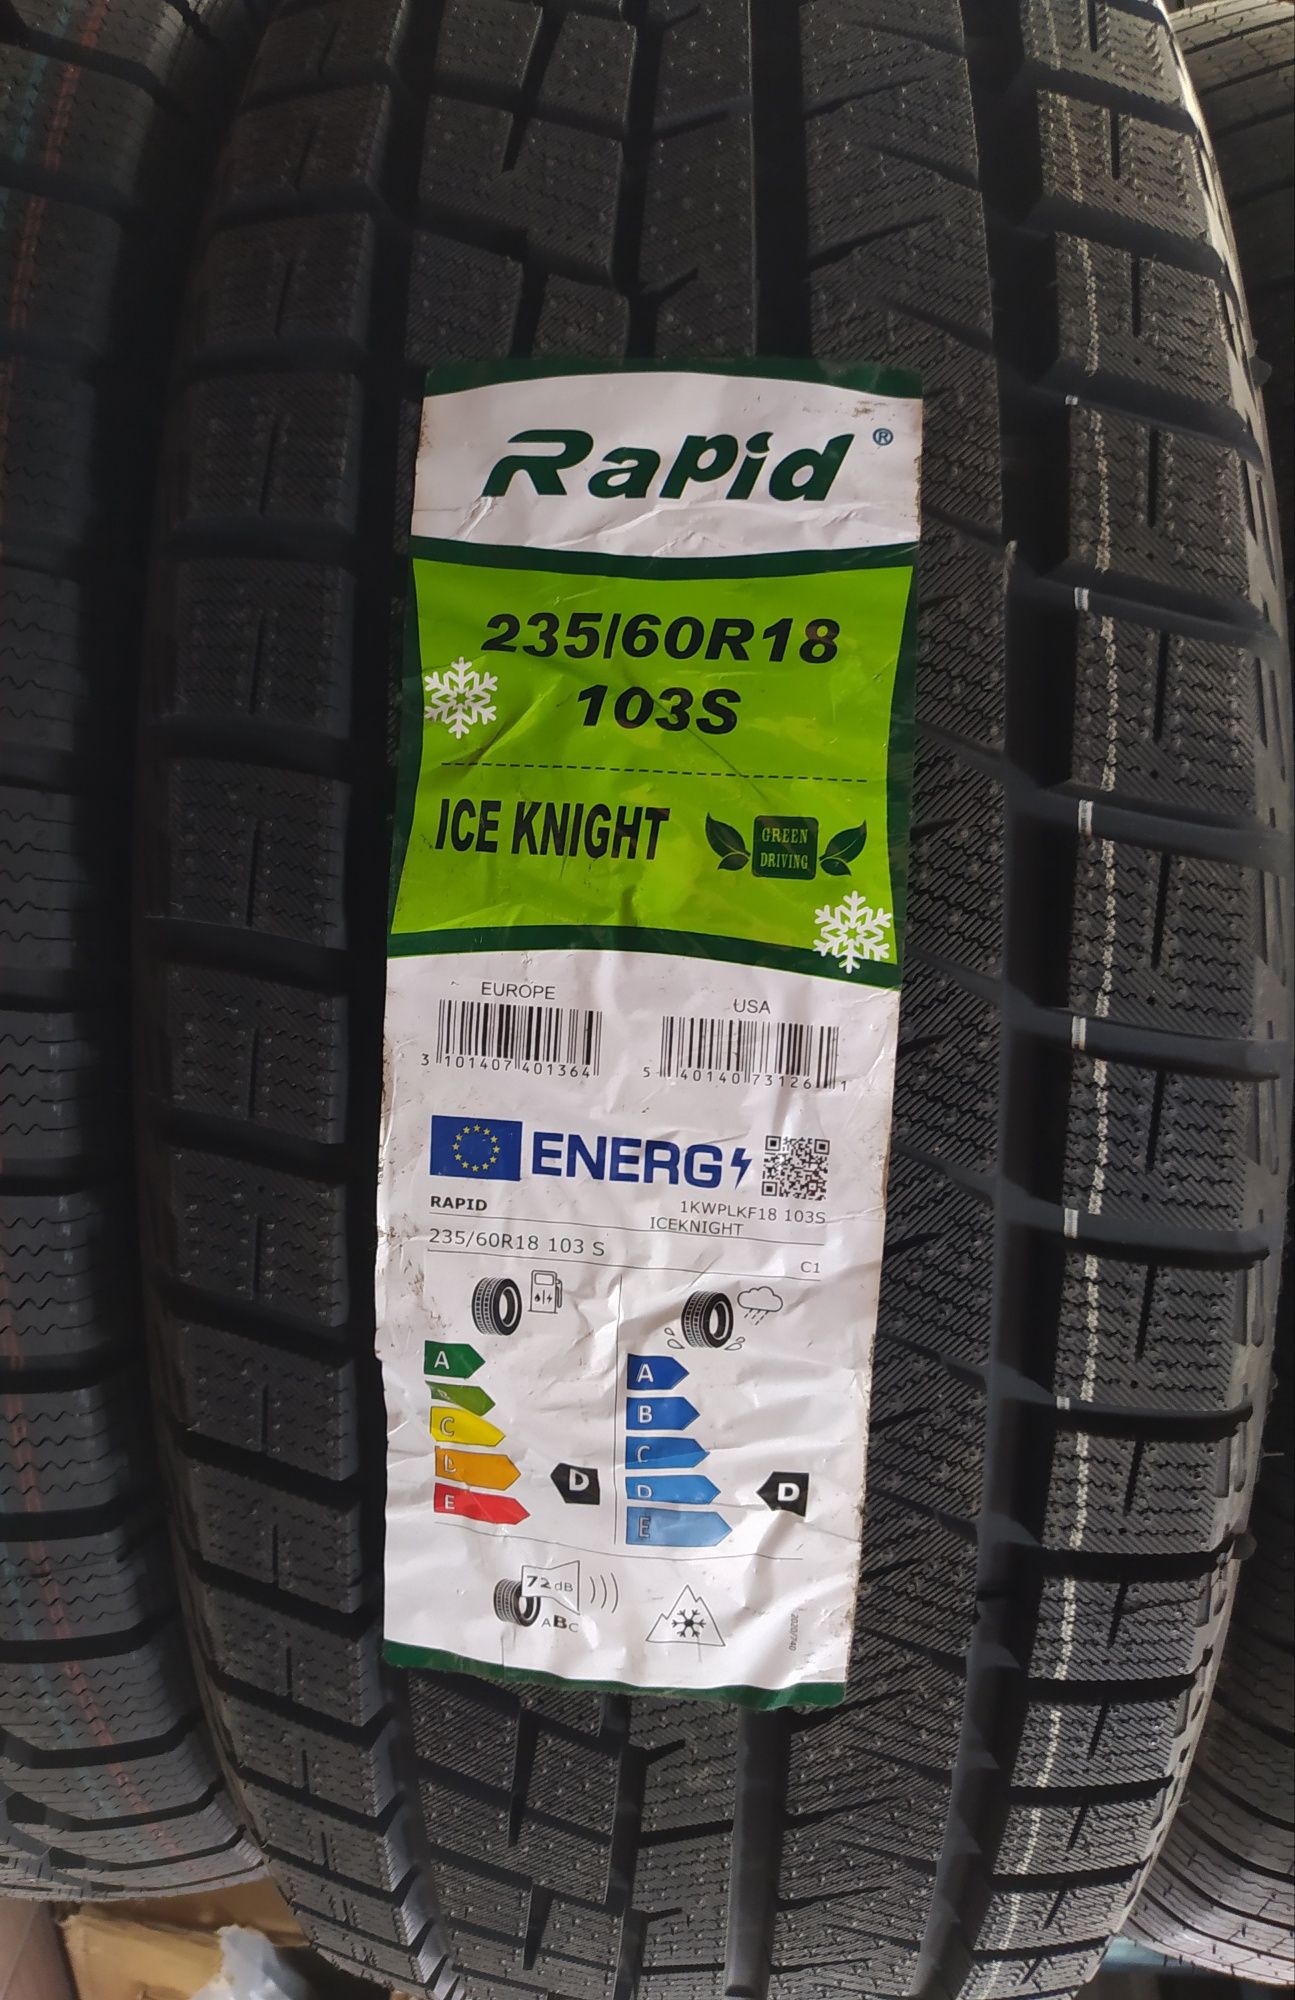 Rapid 235/60R18 Ice Knight